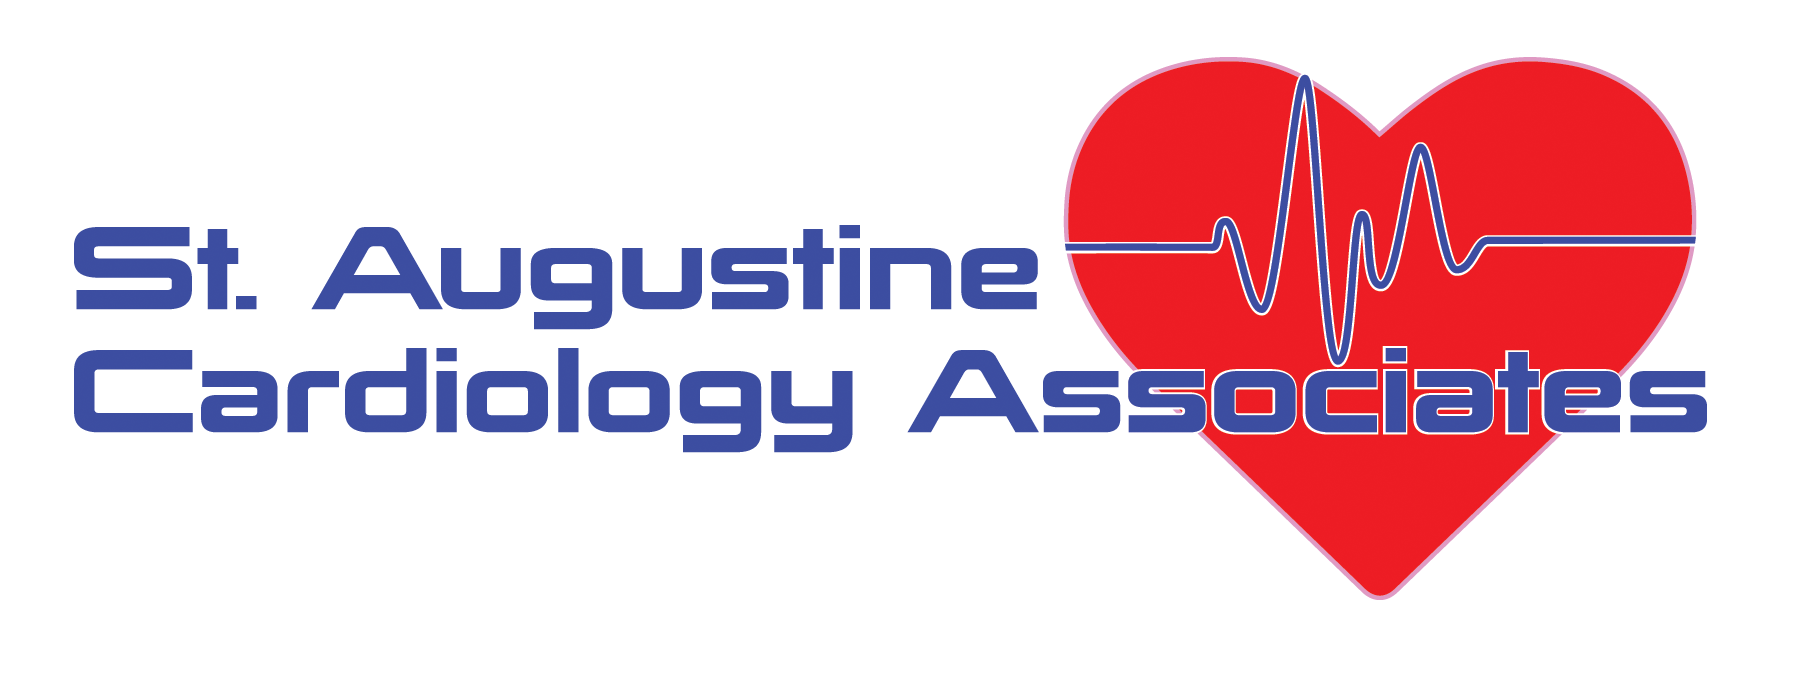 st-augustine-cardiology-associates-logo-final